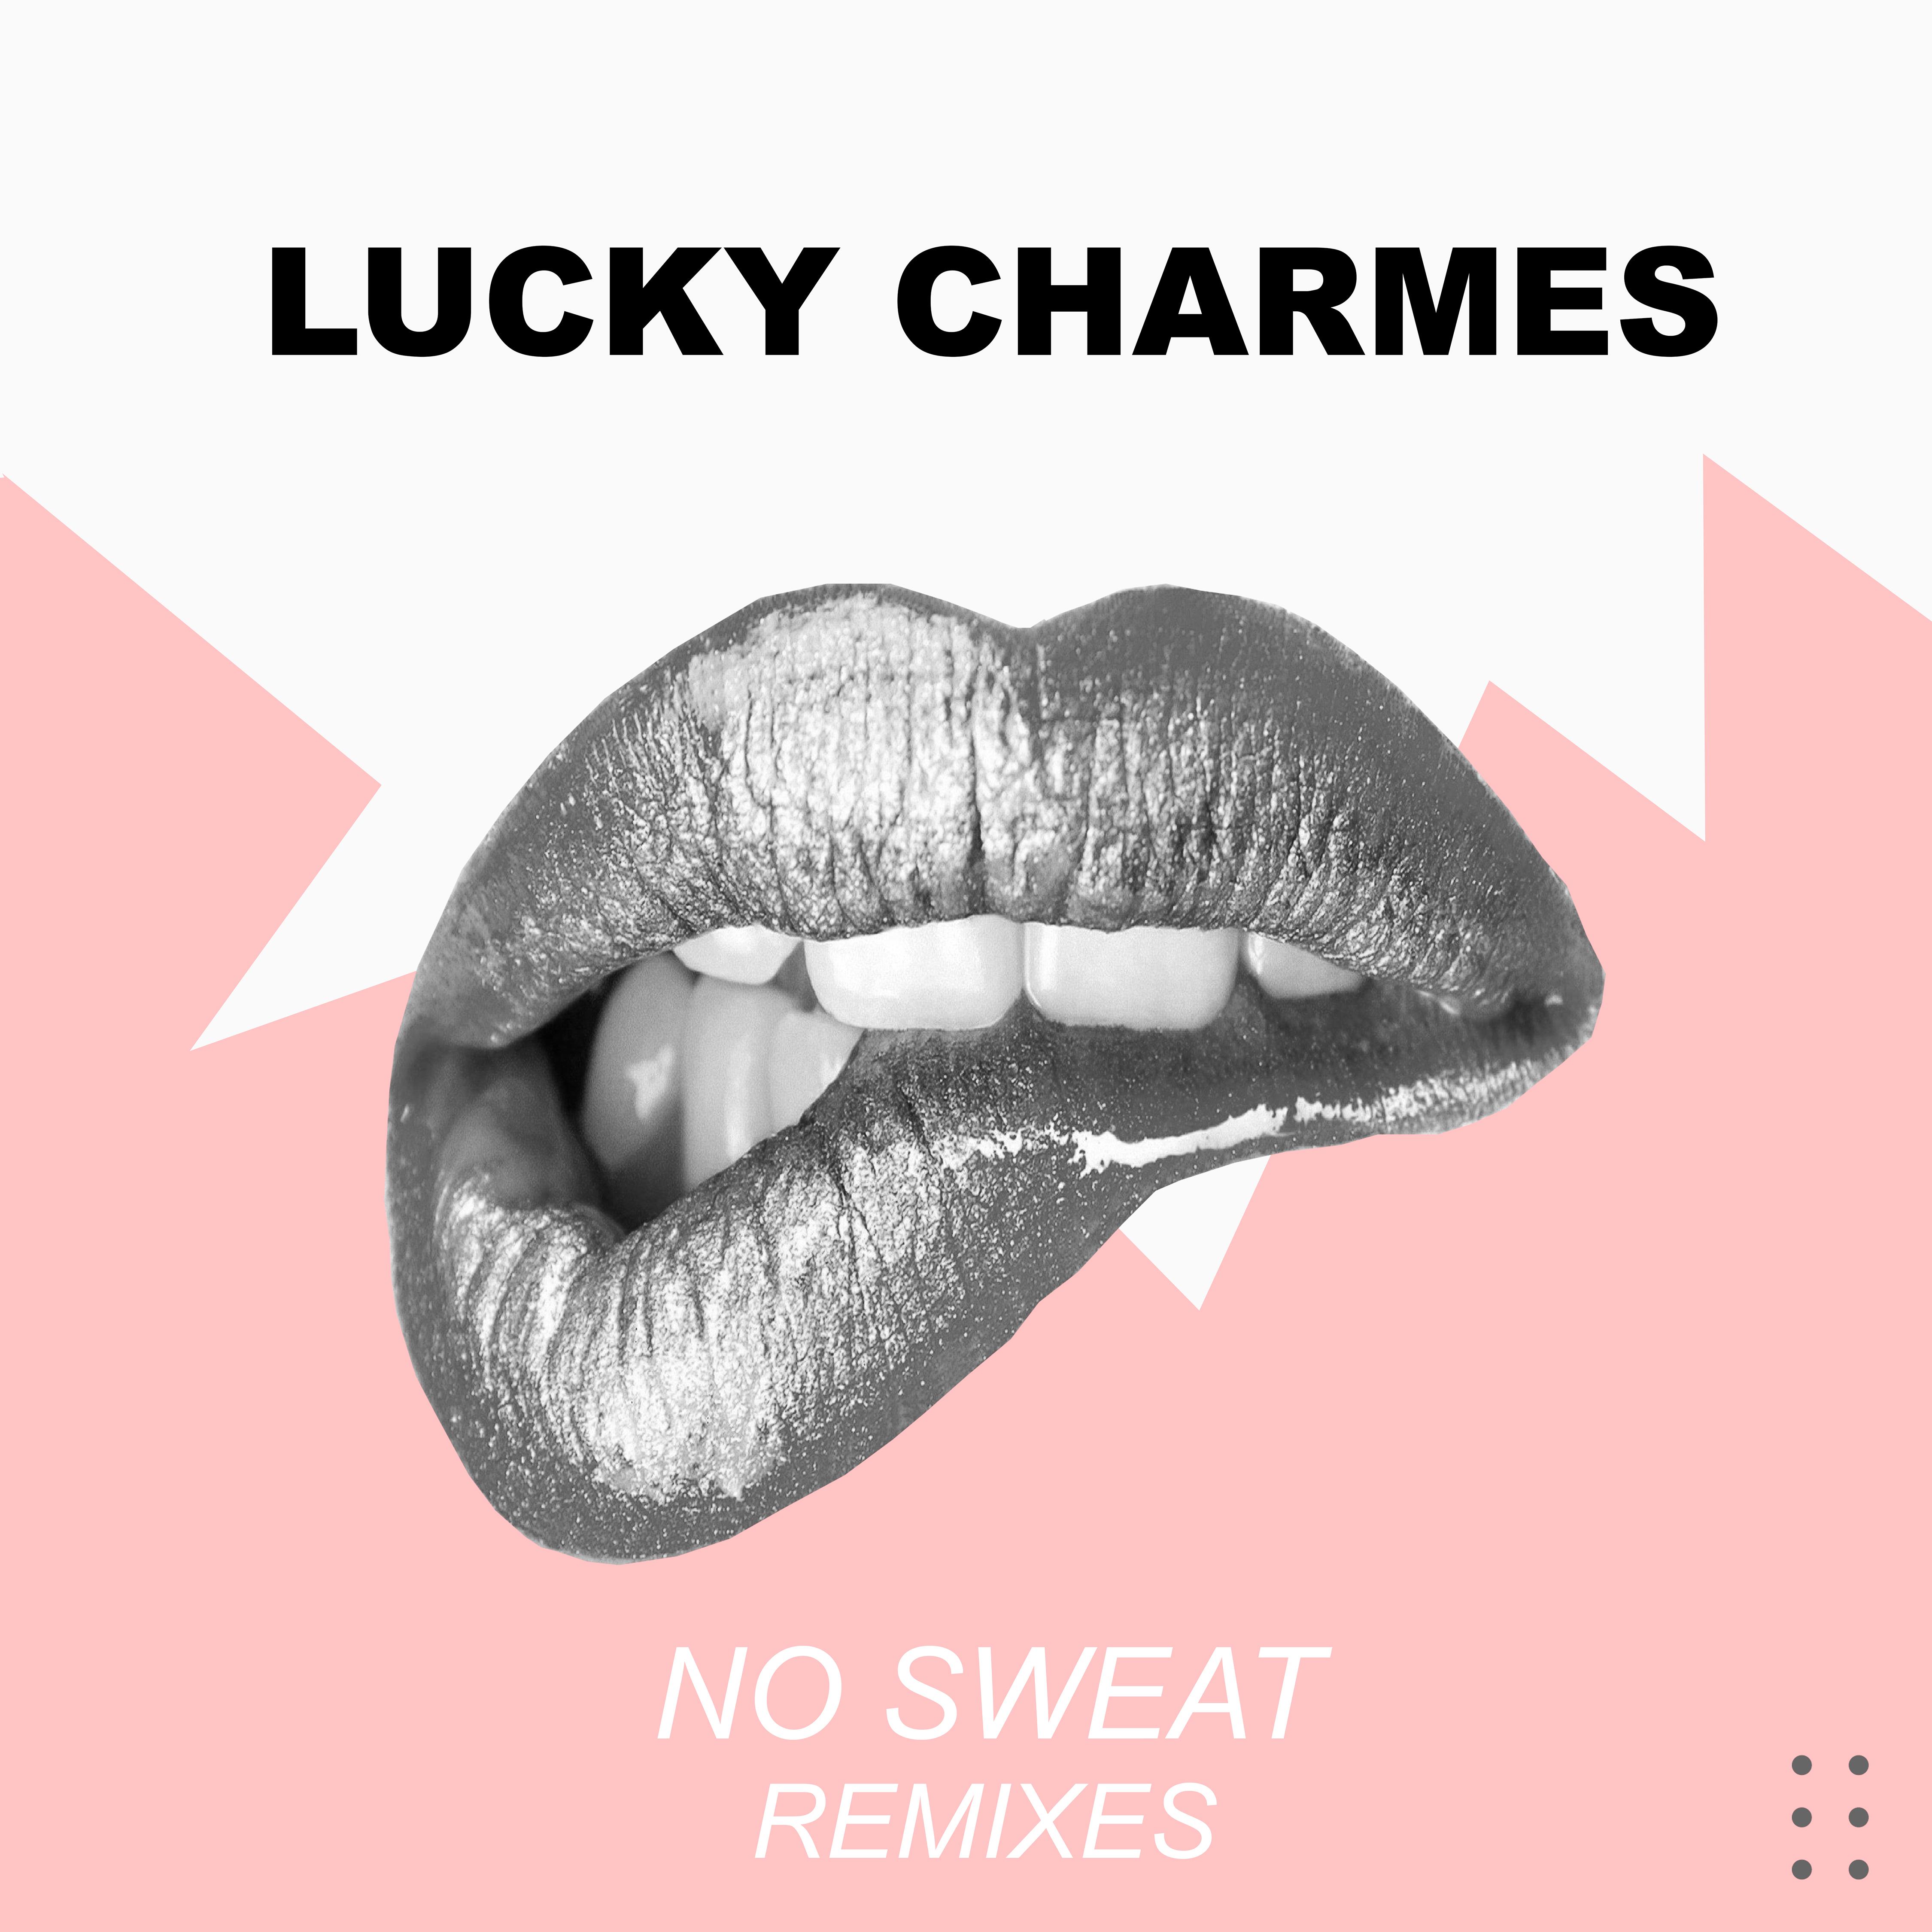 No Sweat Remixes